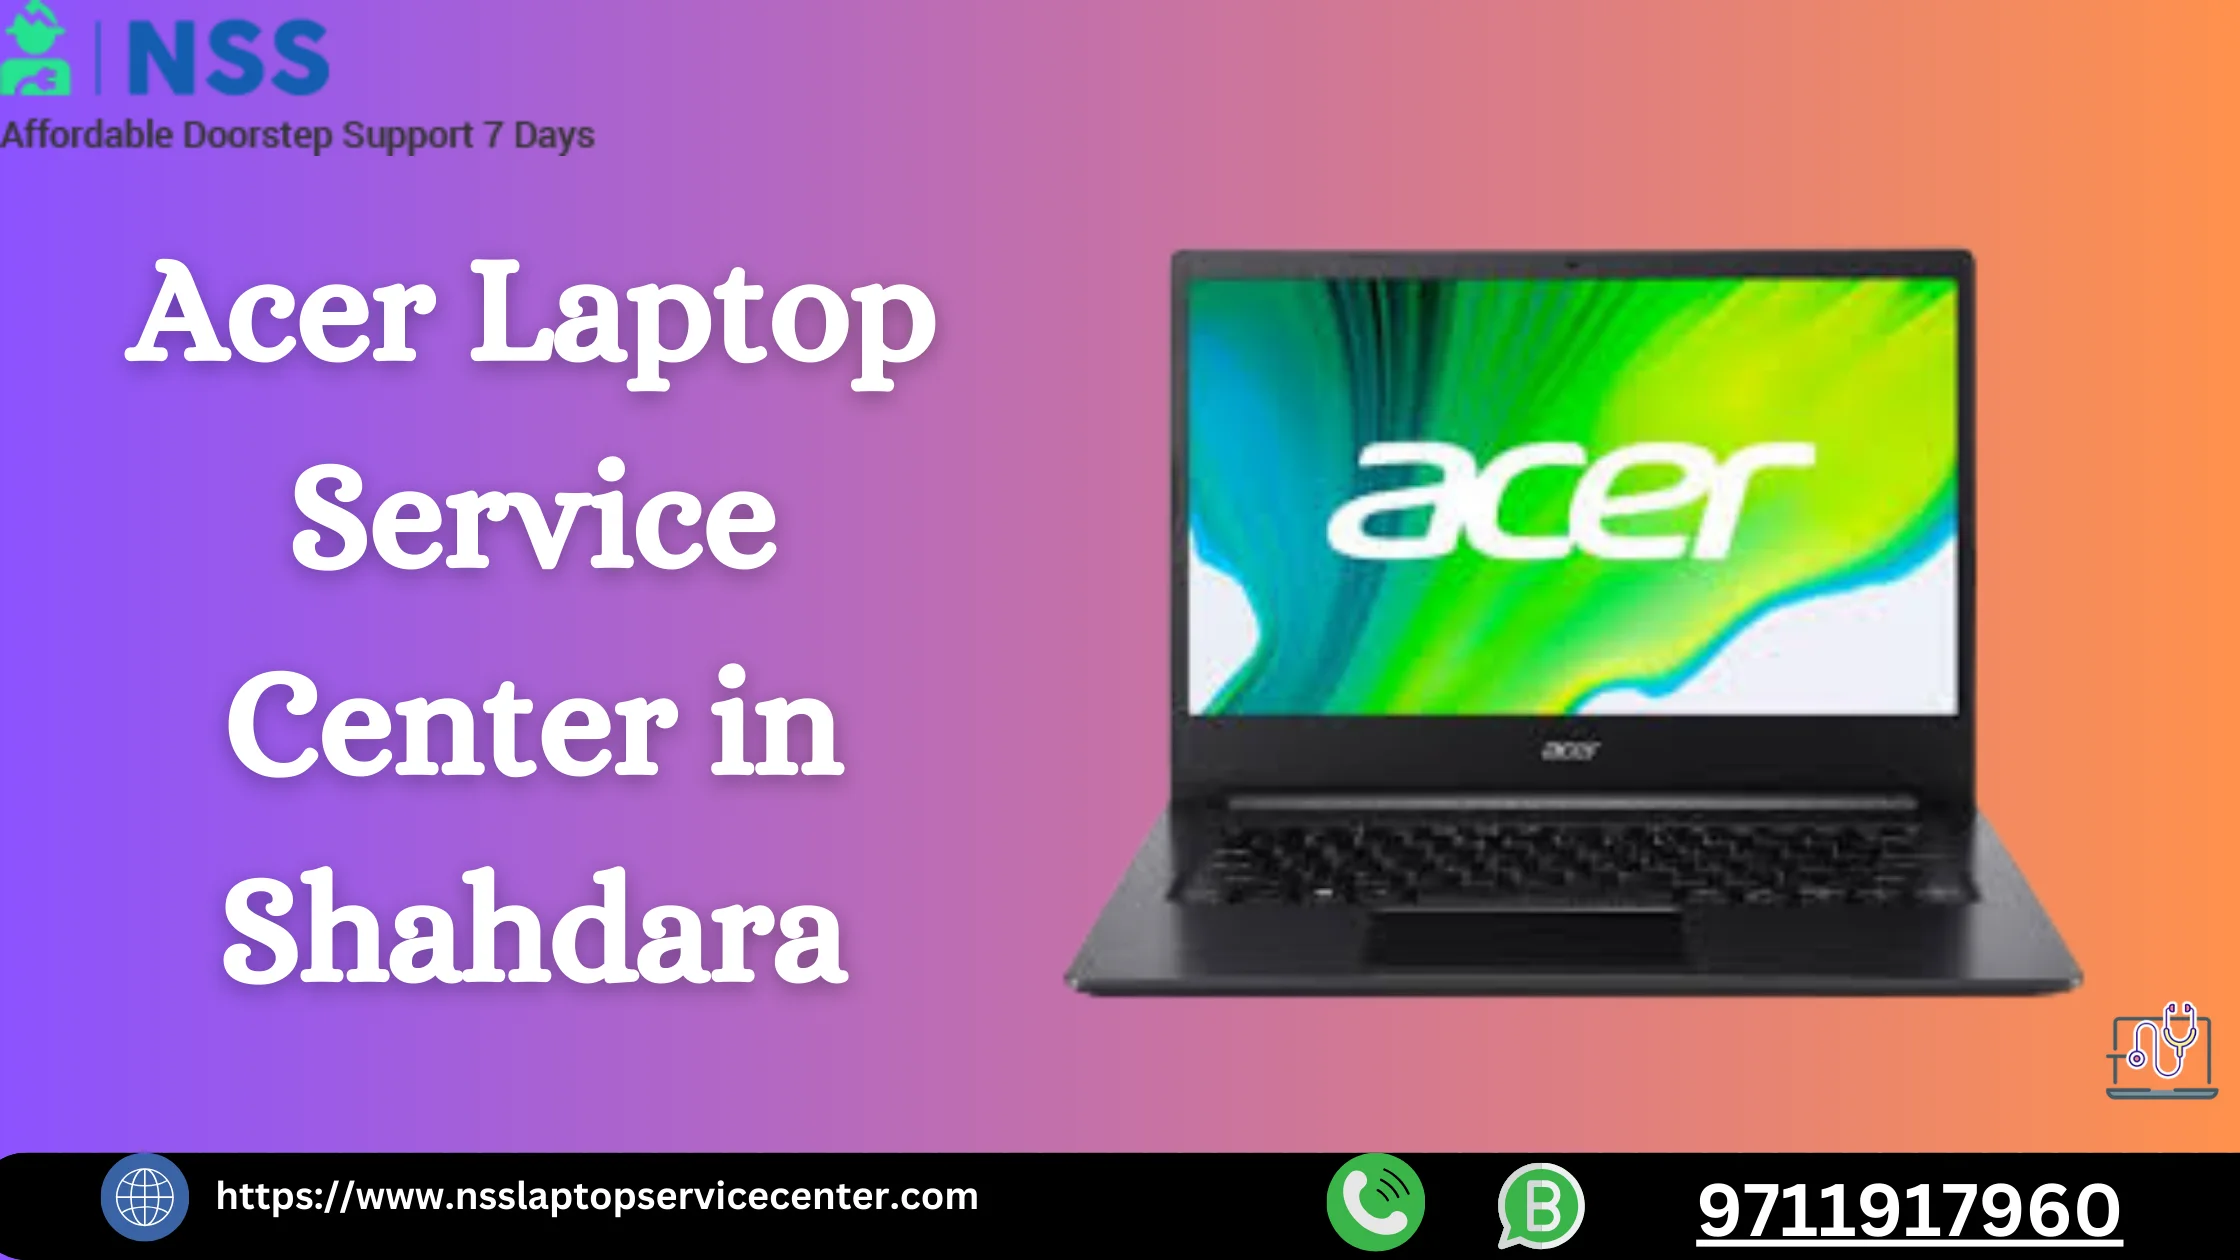 Acer Laptop Service Center in Shahdara Near Delhi